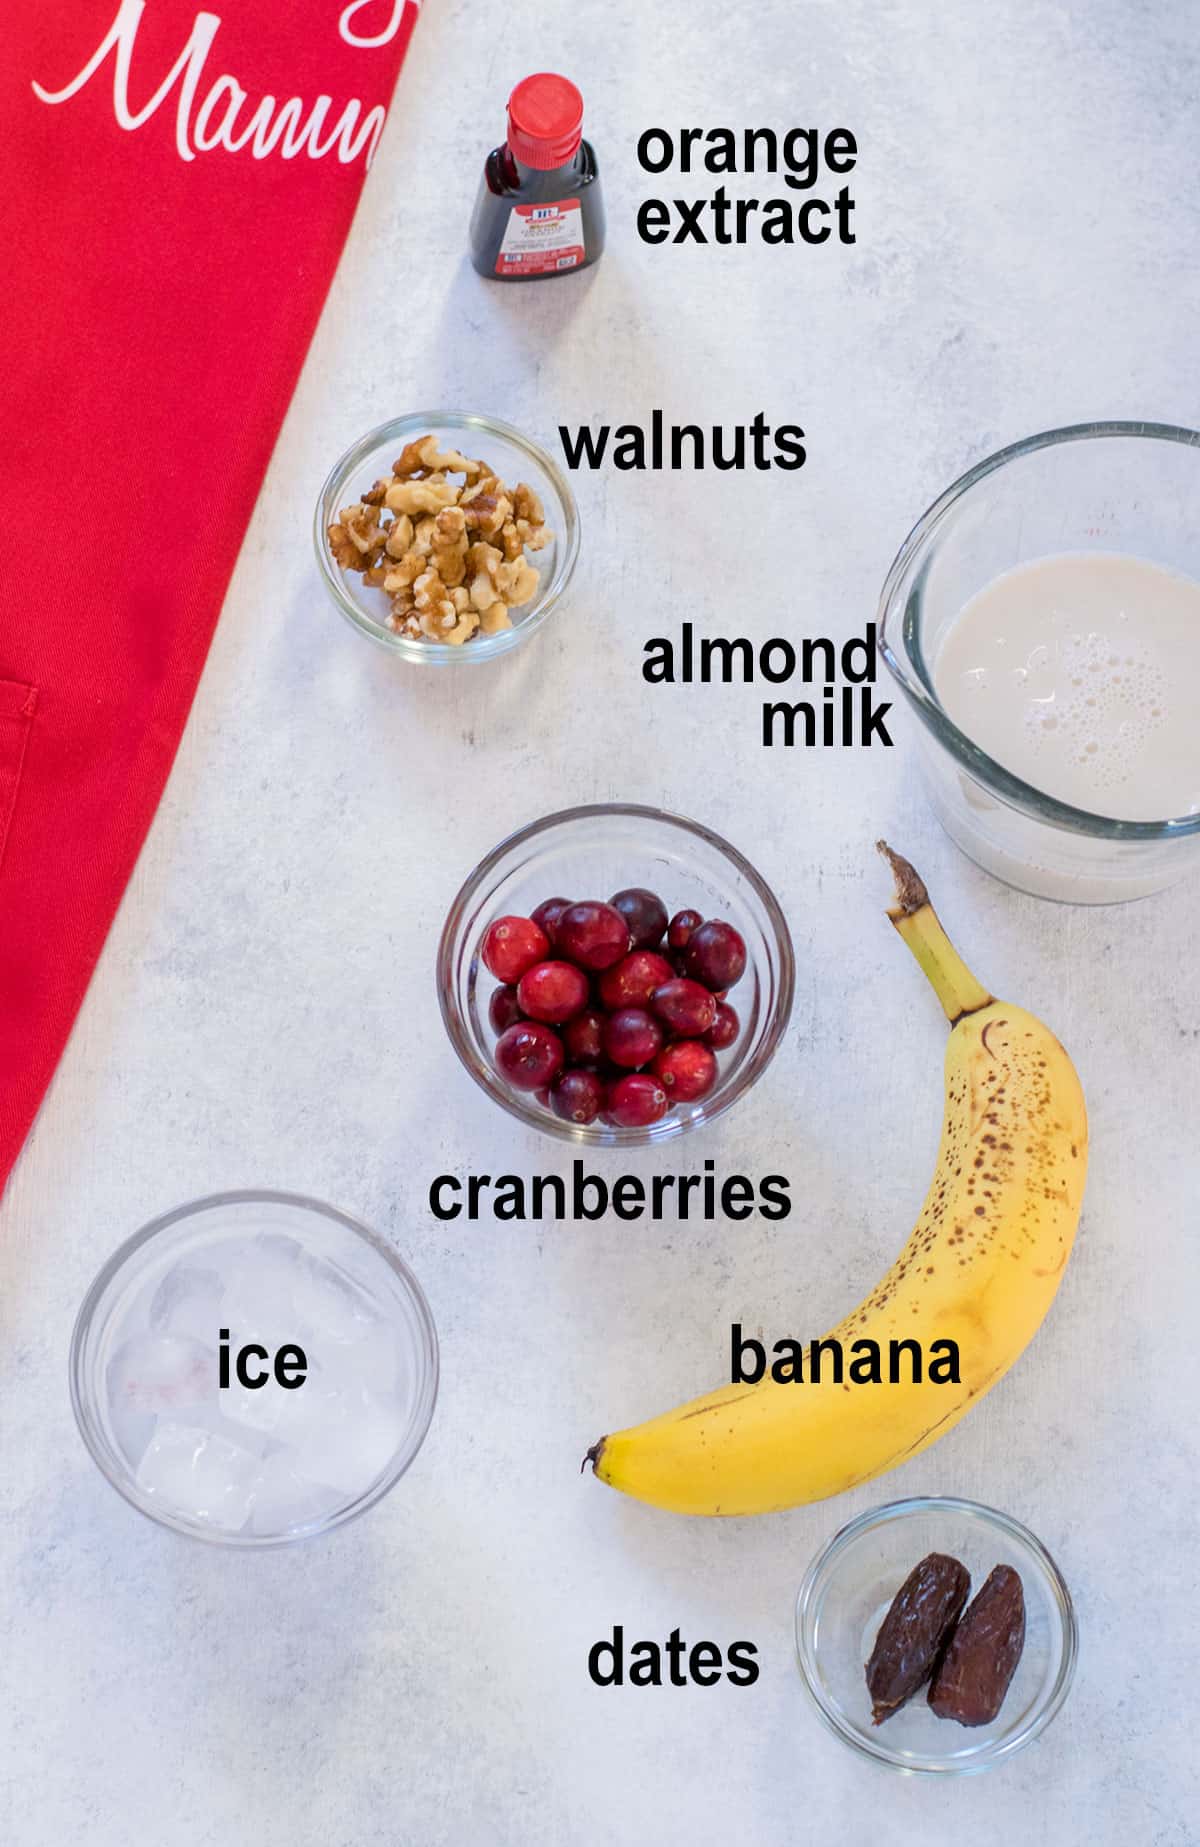 cranberries, banana, walnuts, almond milk, ice, dates, orange extract